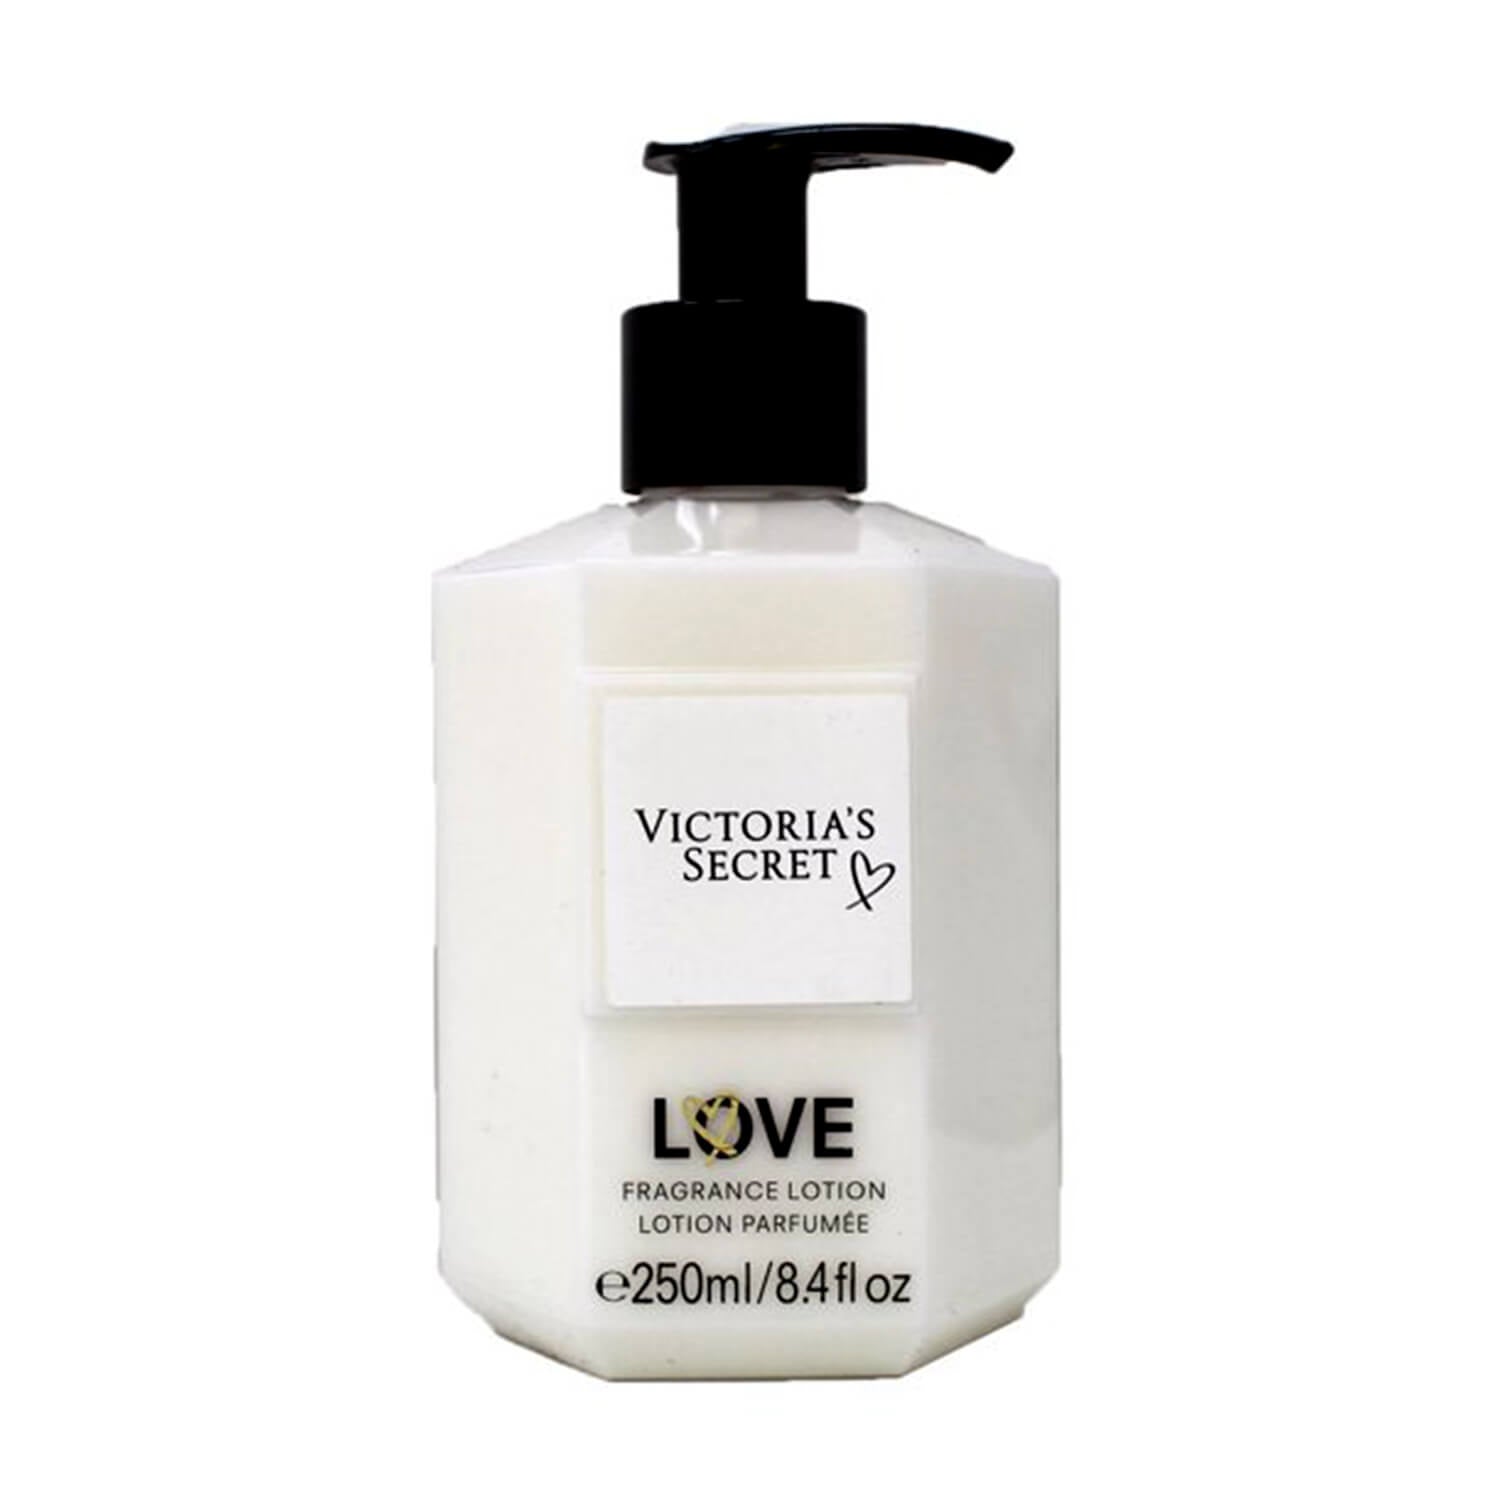 Victoria secret fragrance lotion